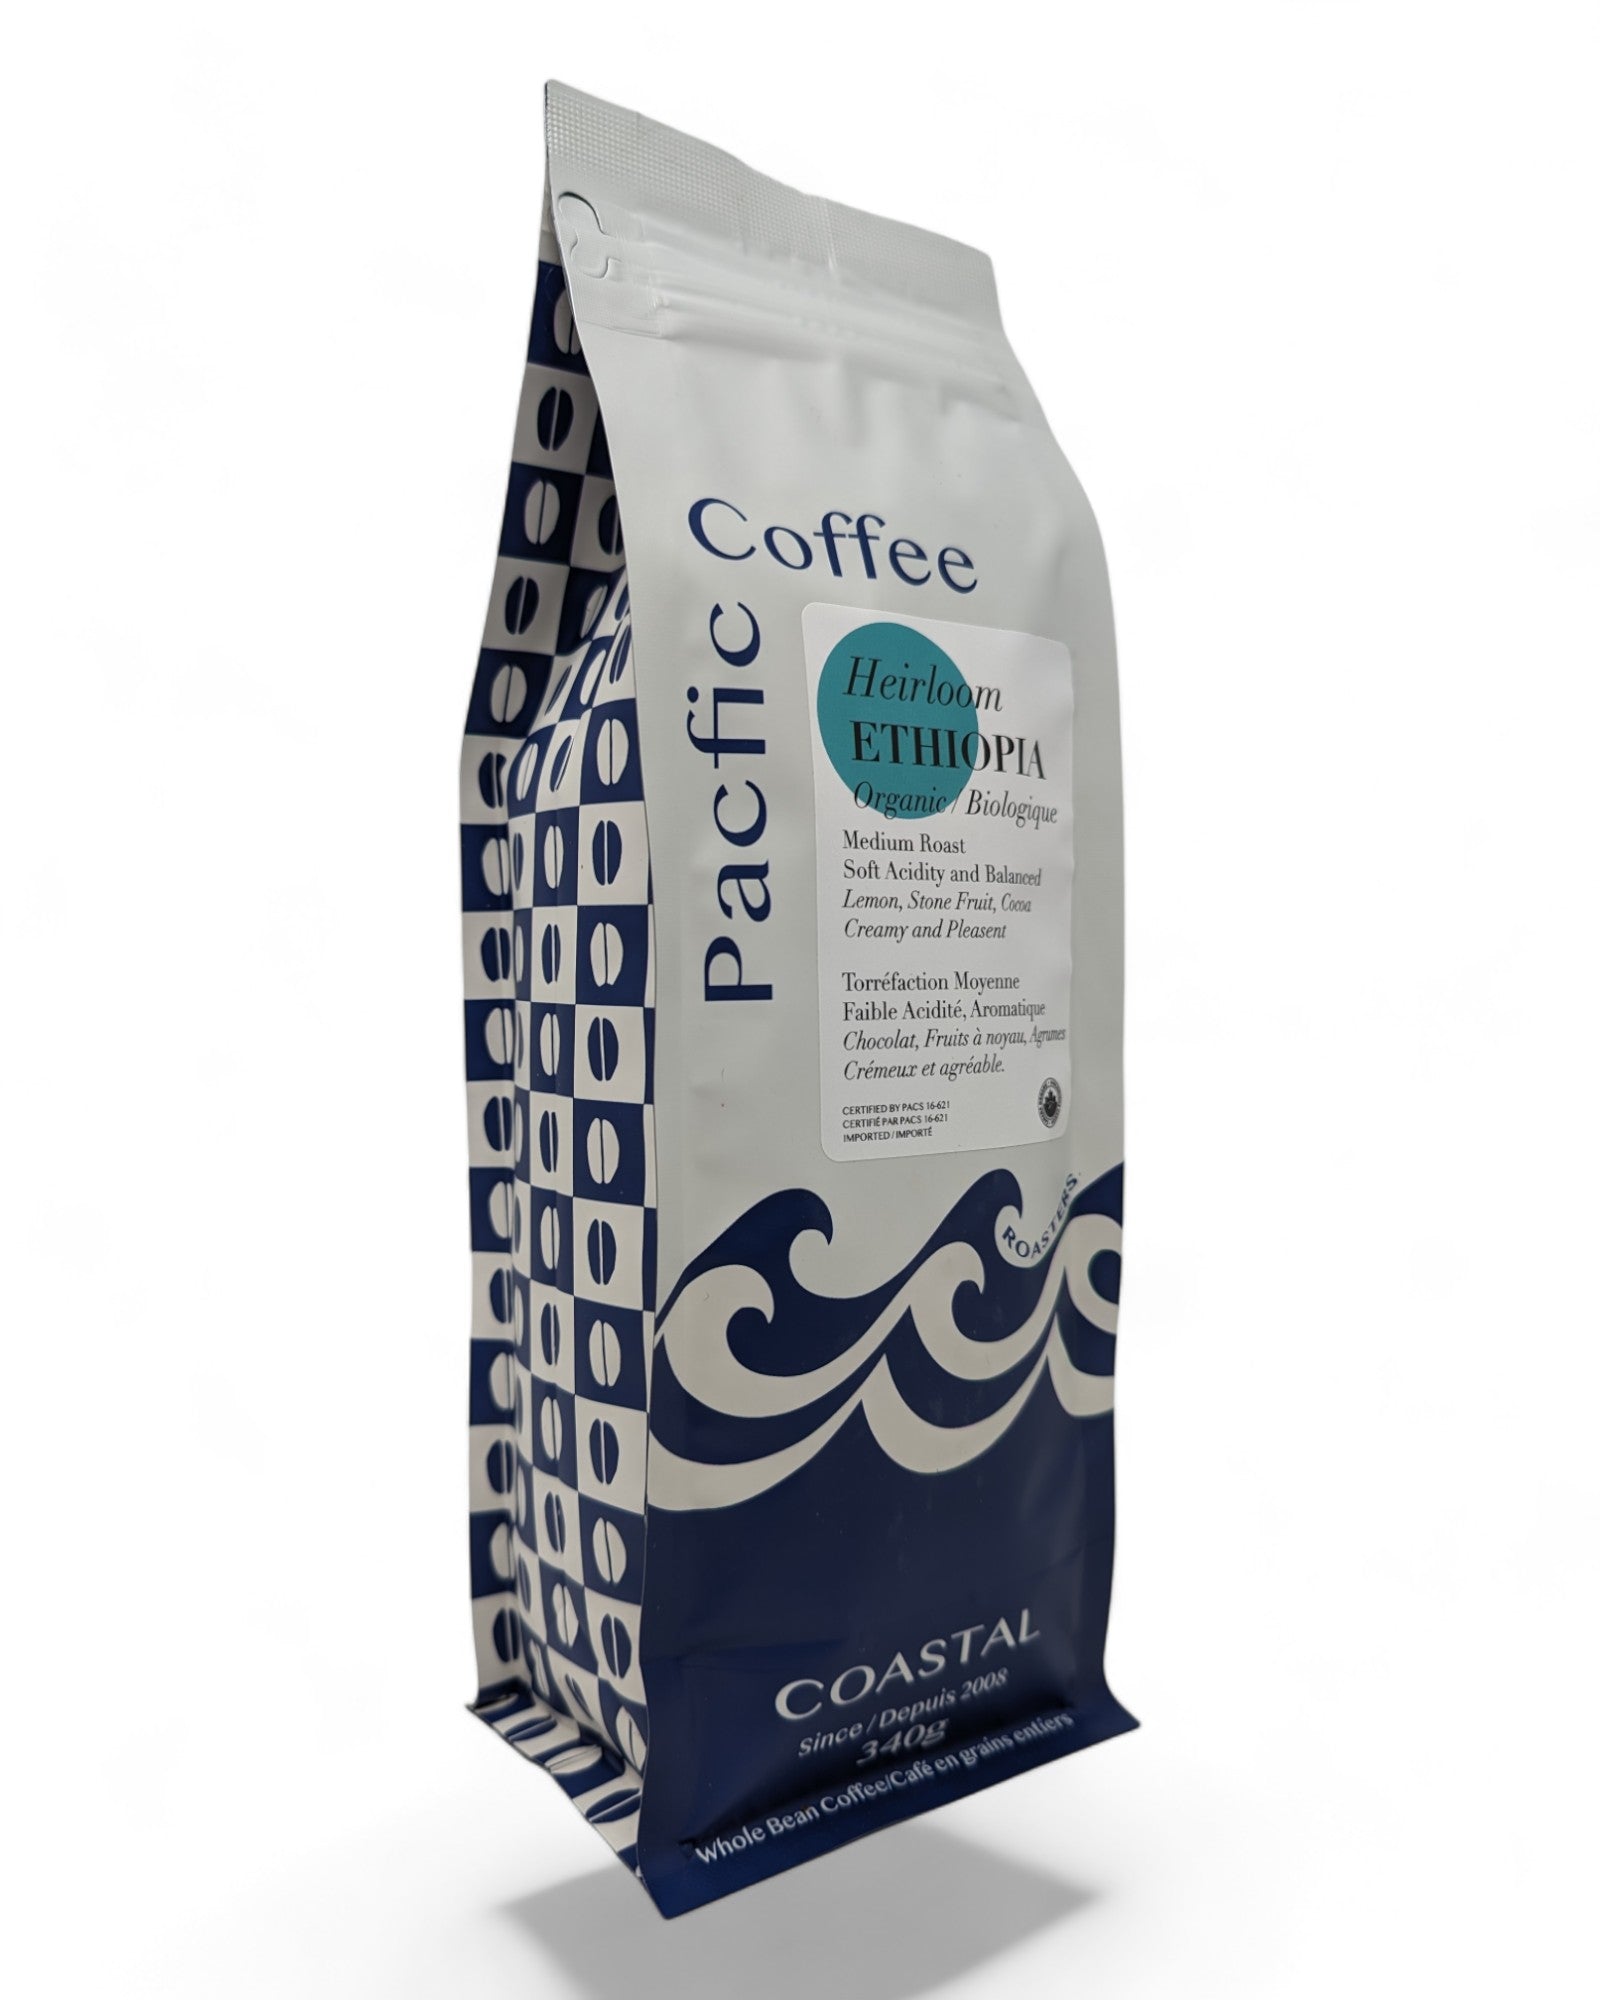 Heirloom Ethiopian Organic Coffee